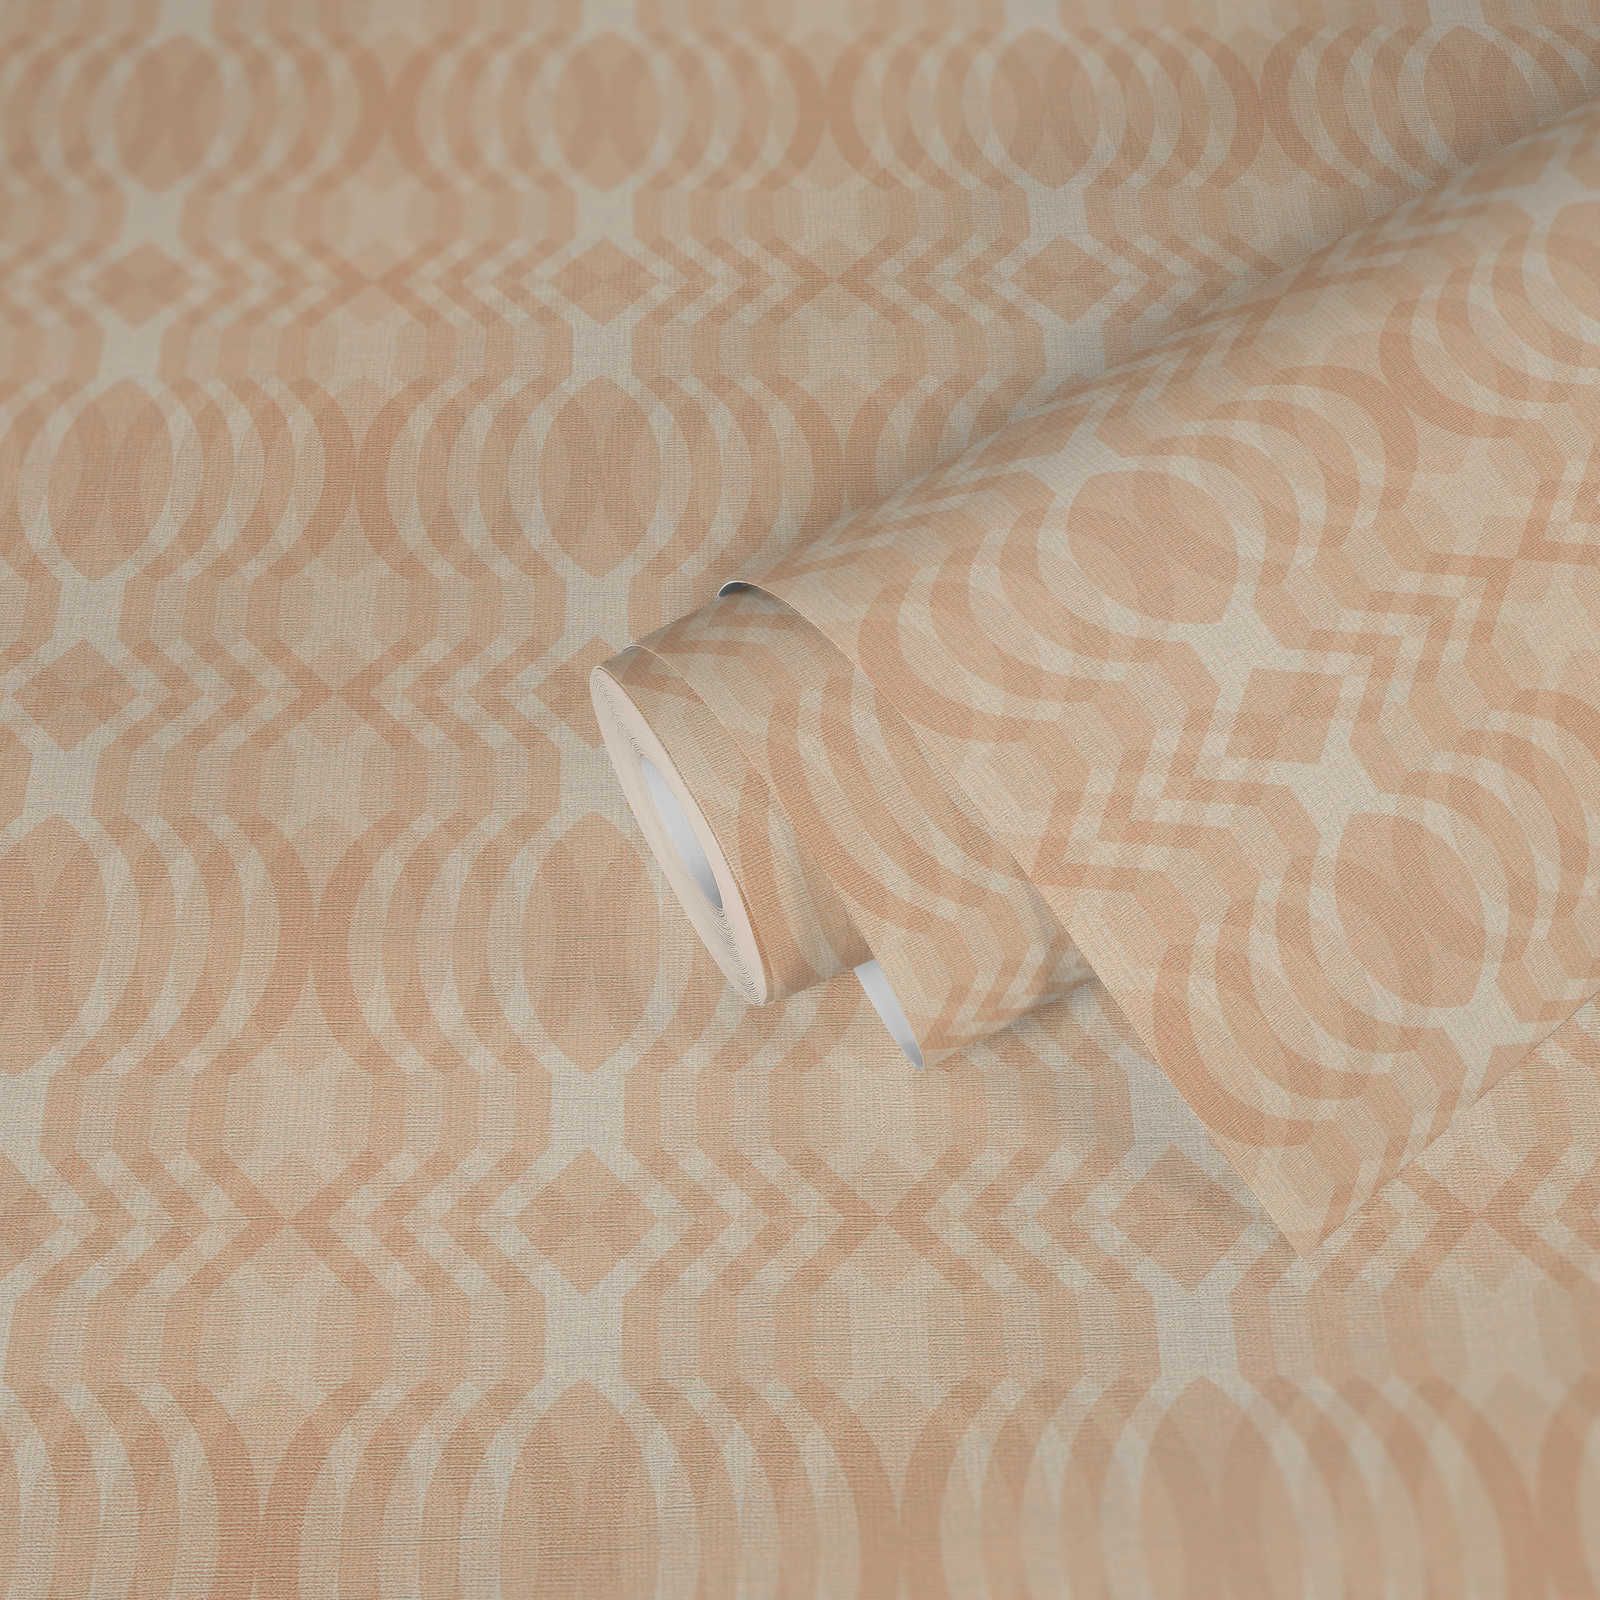             light textured retro wallpaper with geometric pattern - beige, cream, white
        